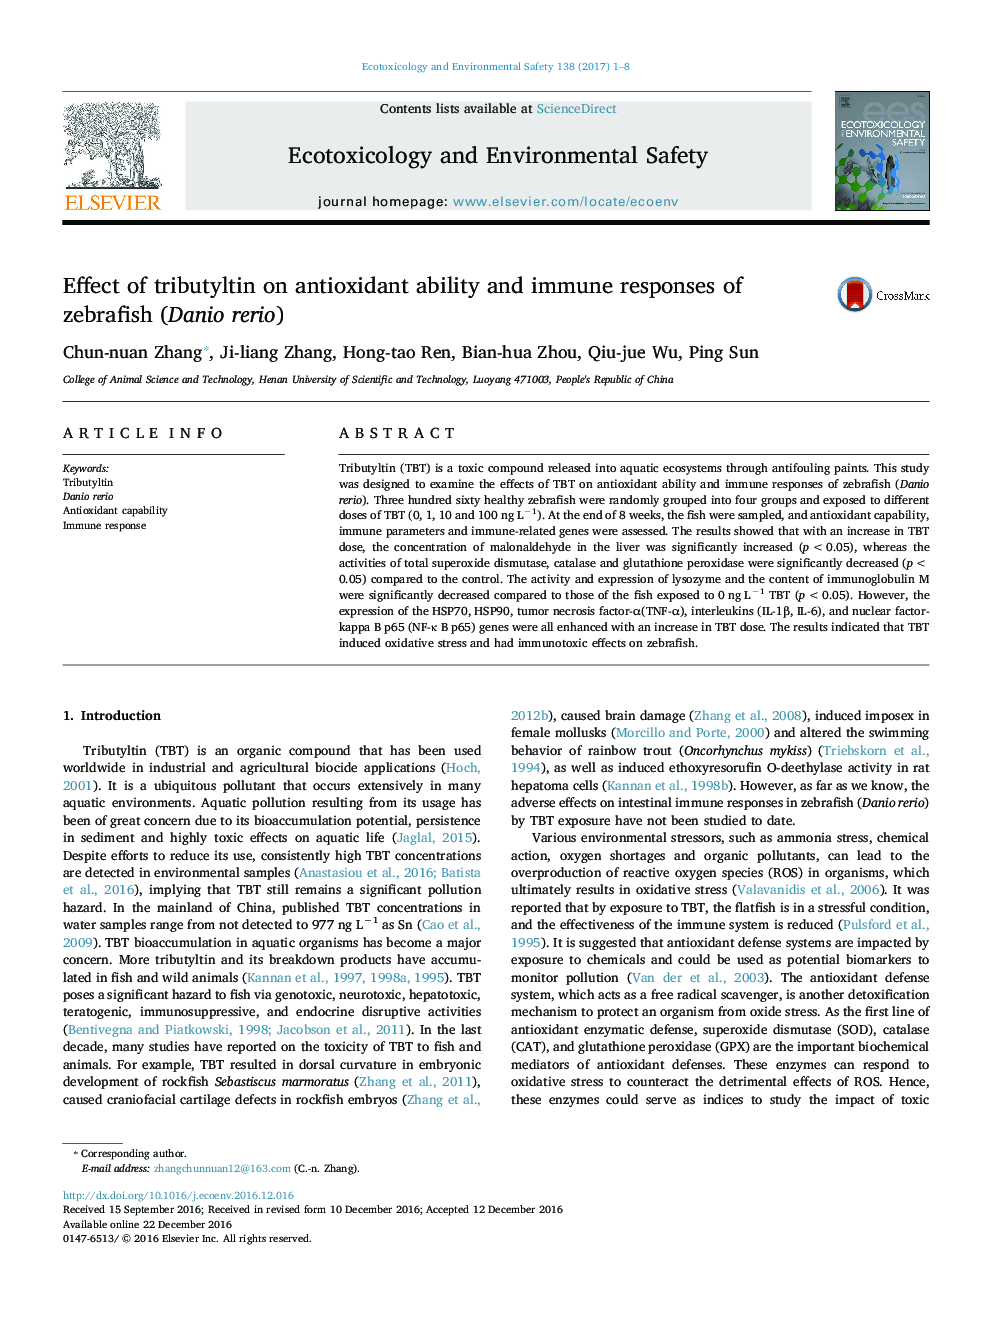 Effect of tributyltin on antioxidant ability and immune responses of zebrafish (Danio rerio)